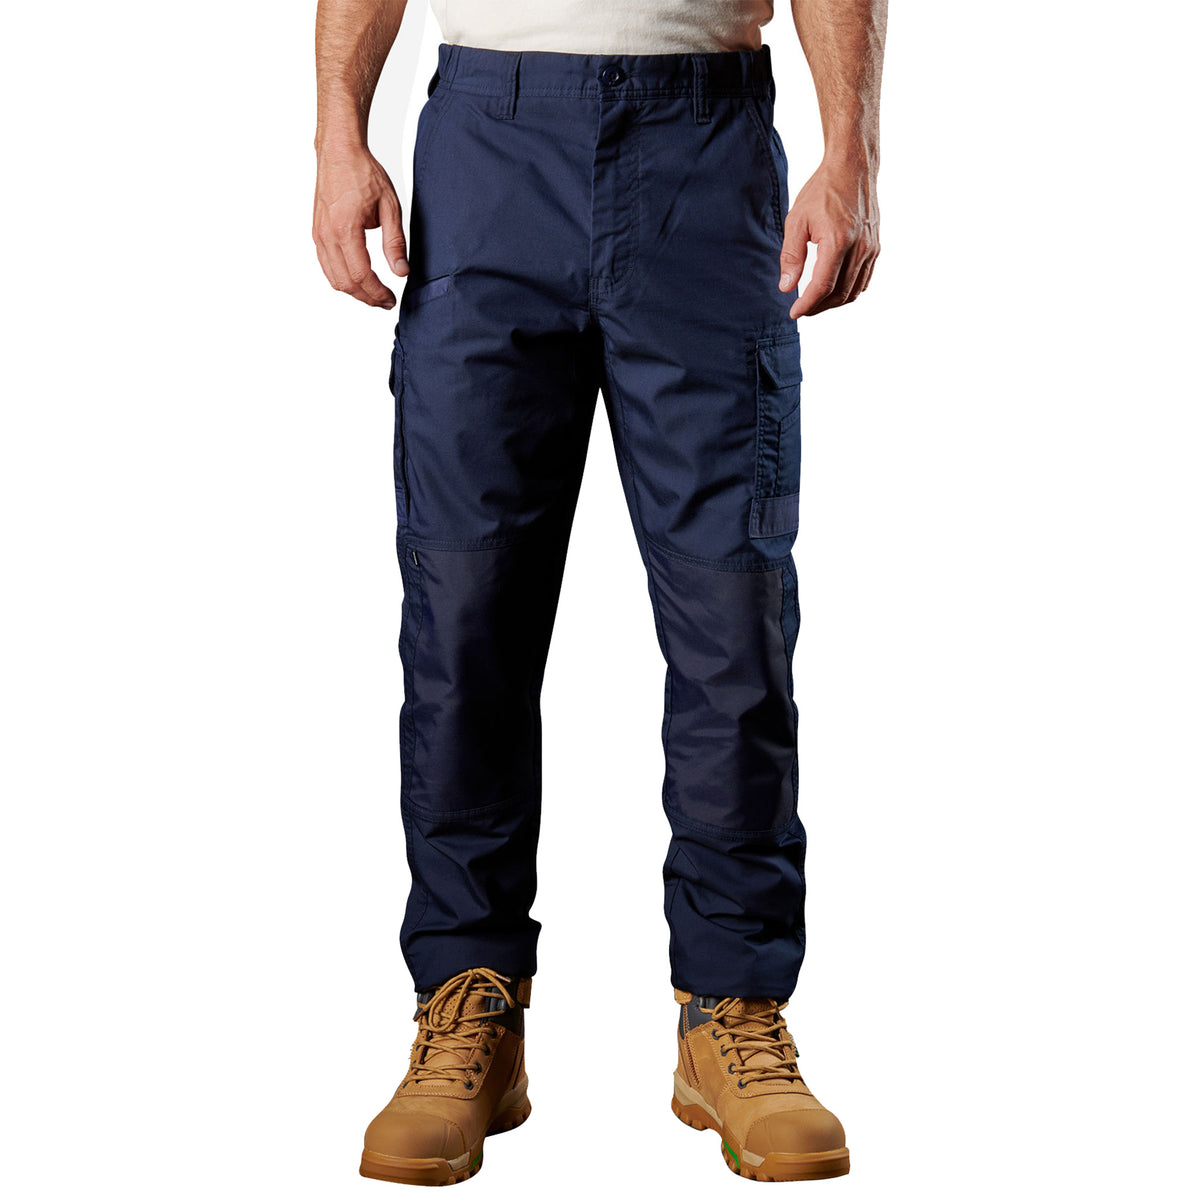 Used Navy Blue Cargo Work Pants